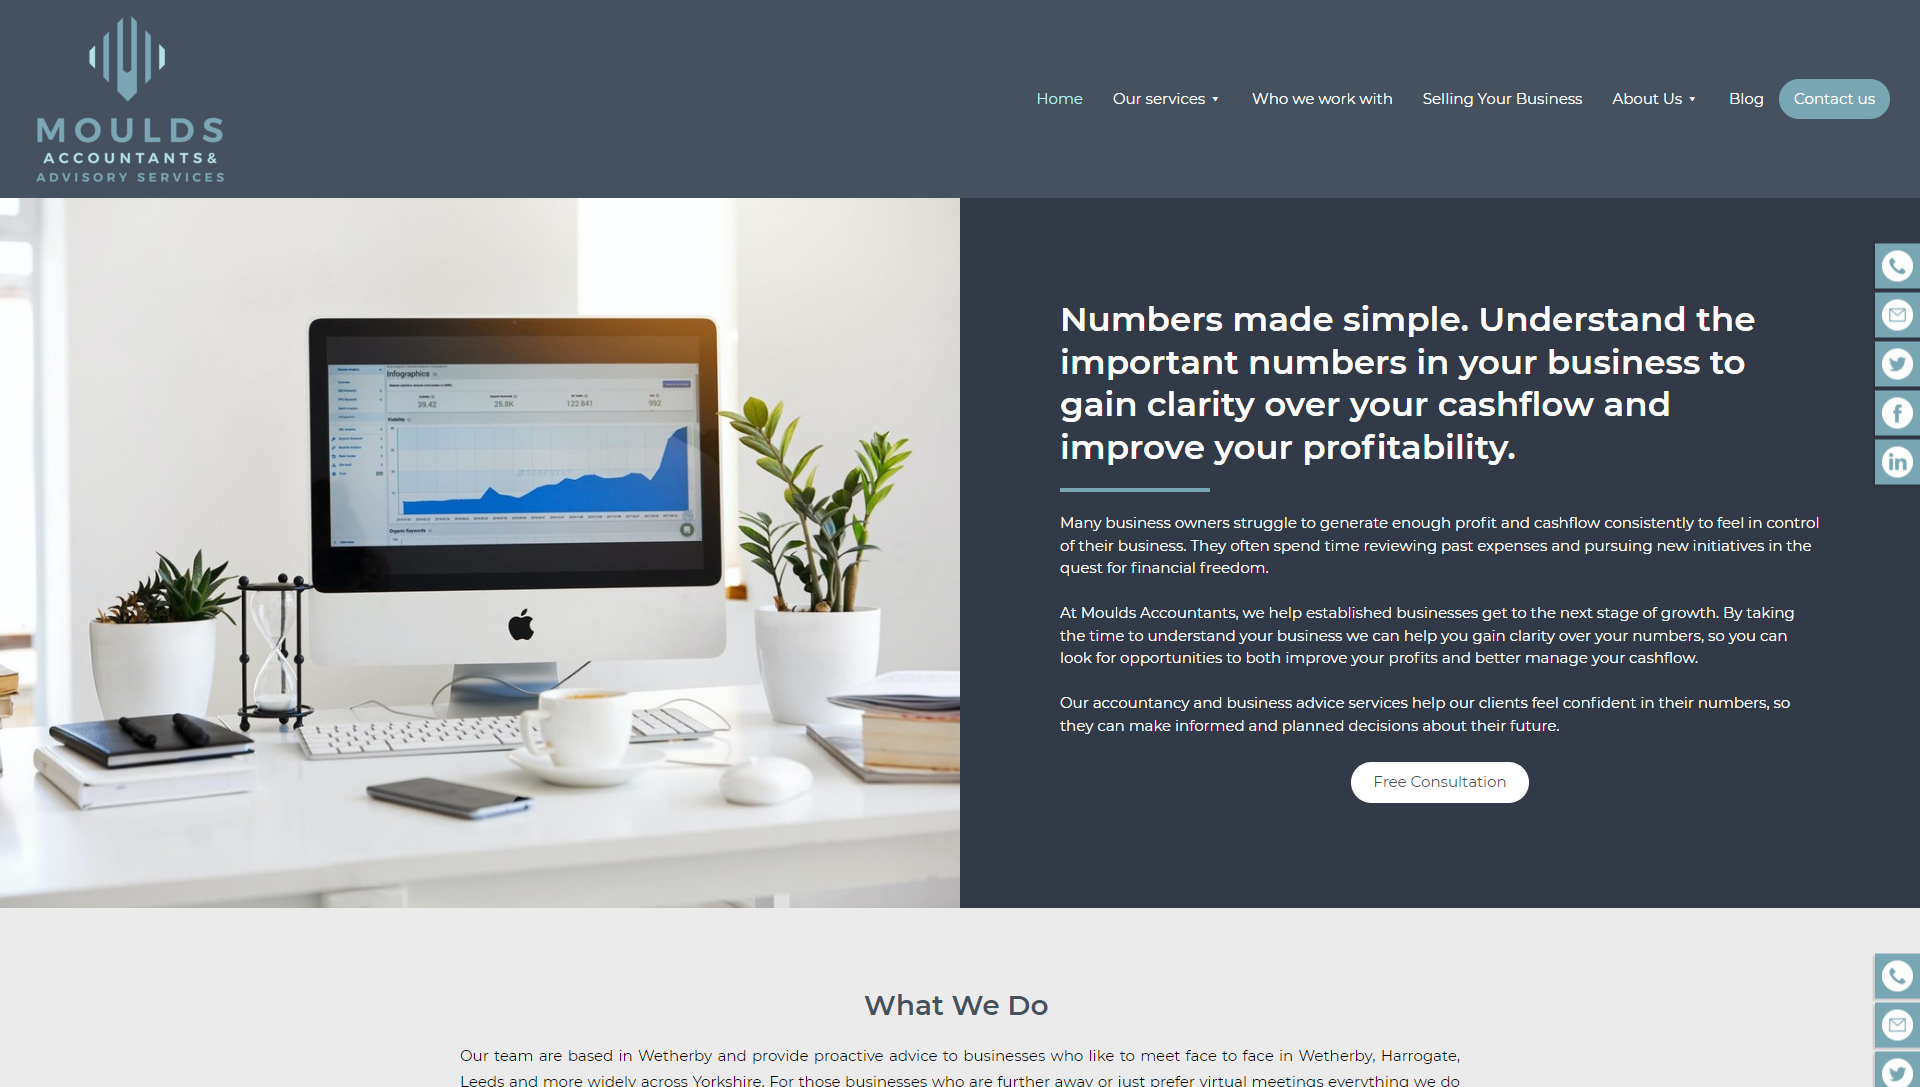 Mould's Accountants website design